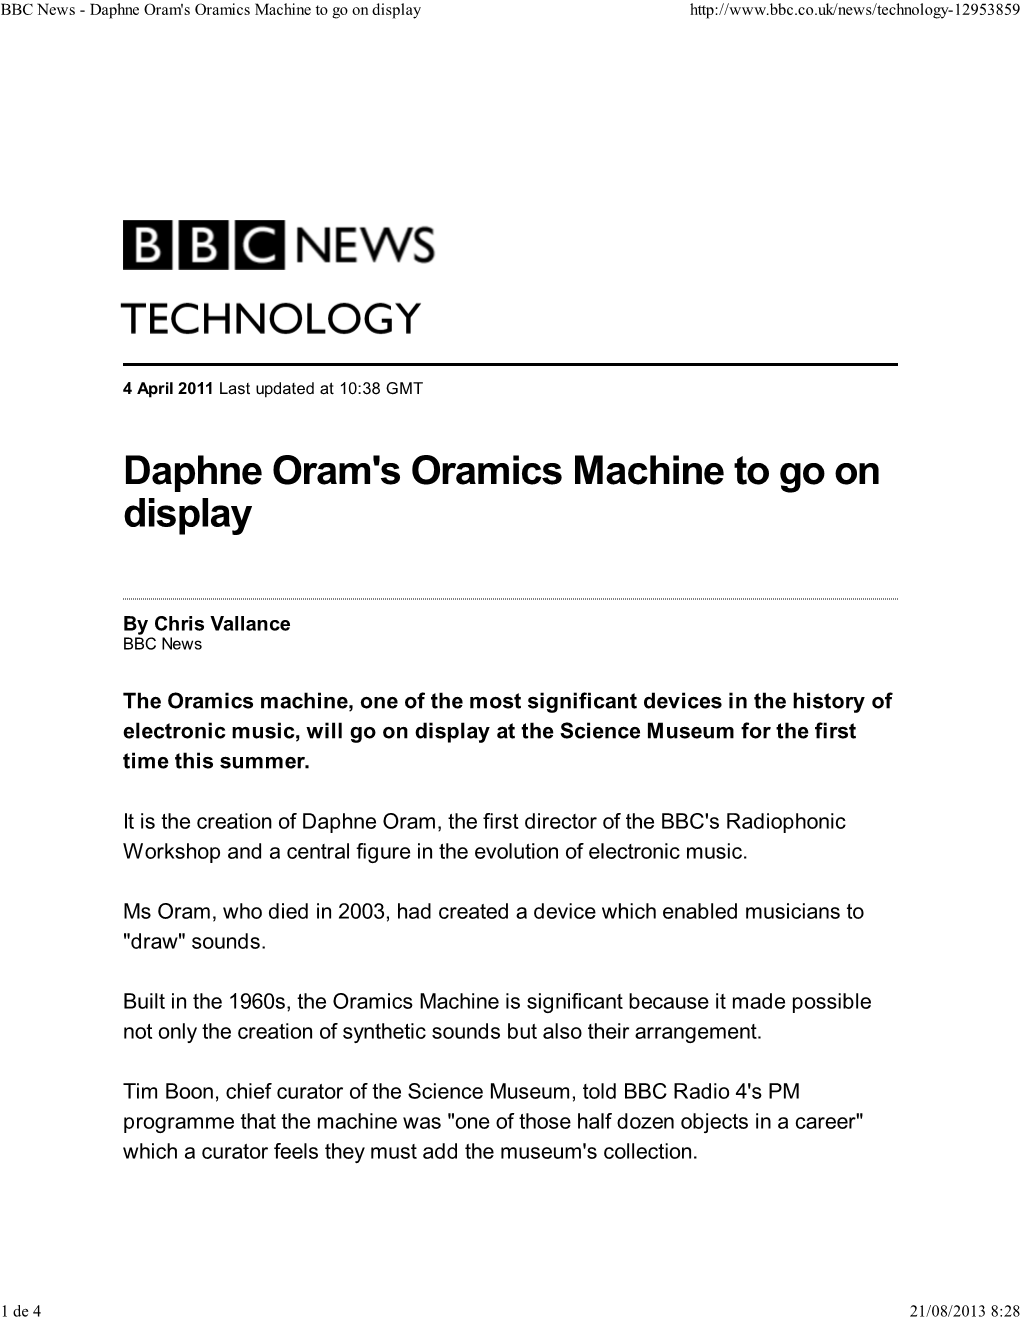 BBC News - Daphne Oram's Oramics Machine to Go on Display